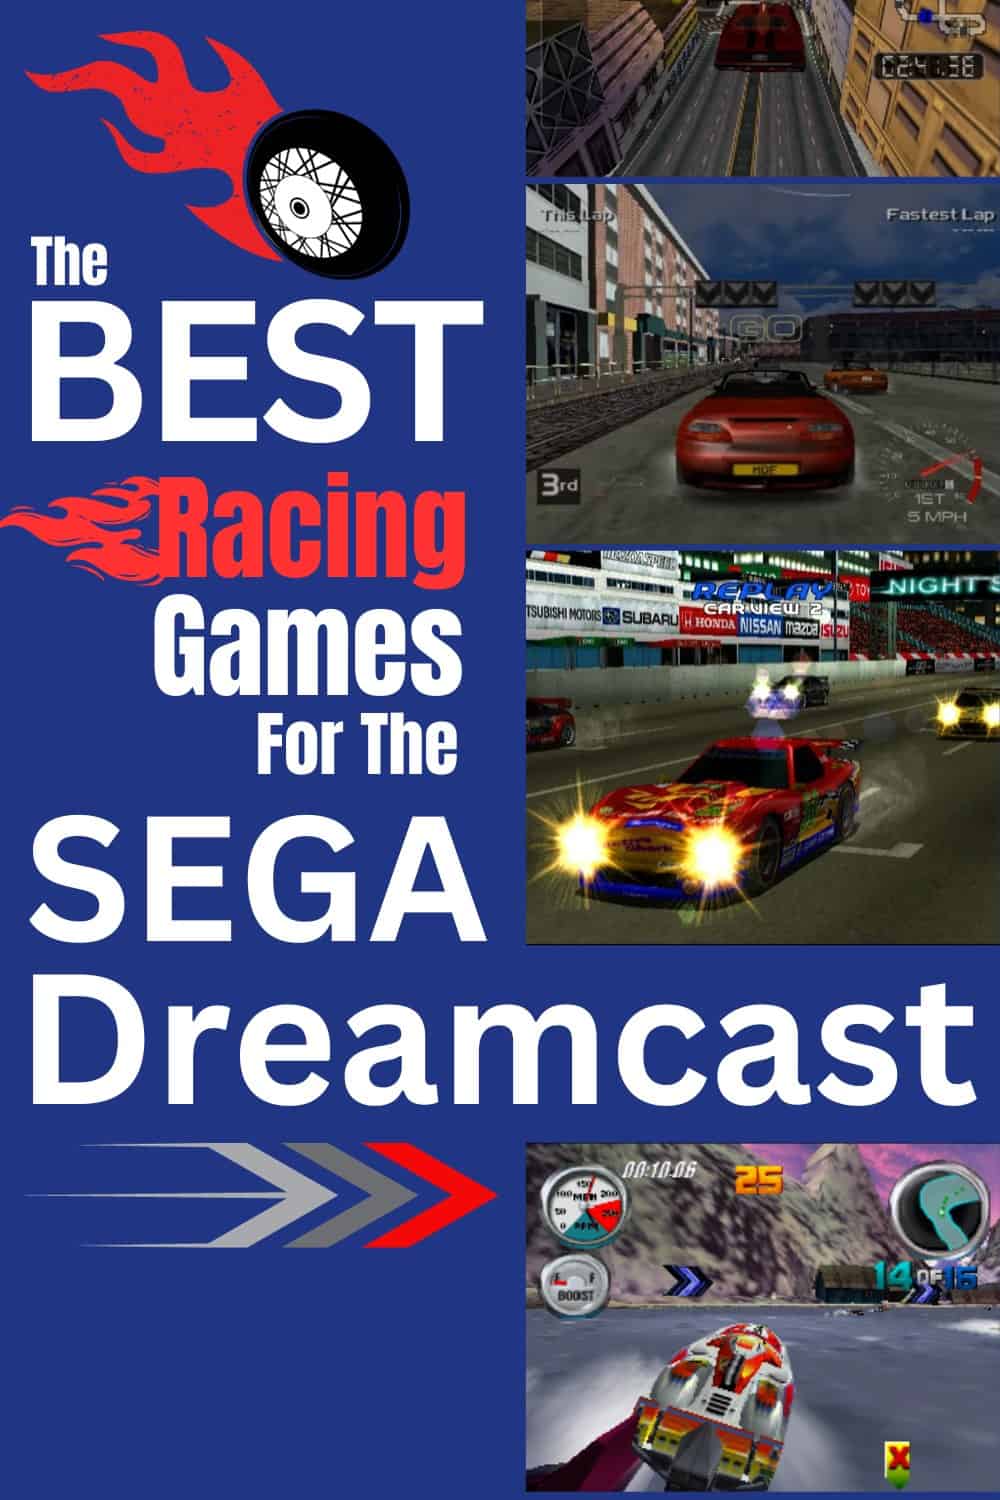 List of dreamcast racing games